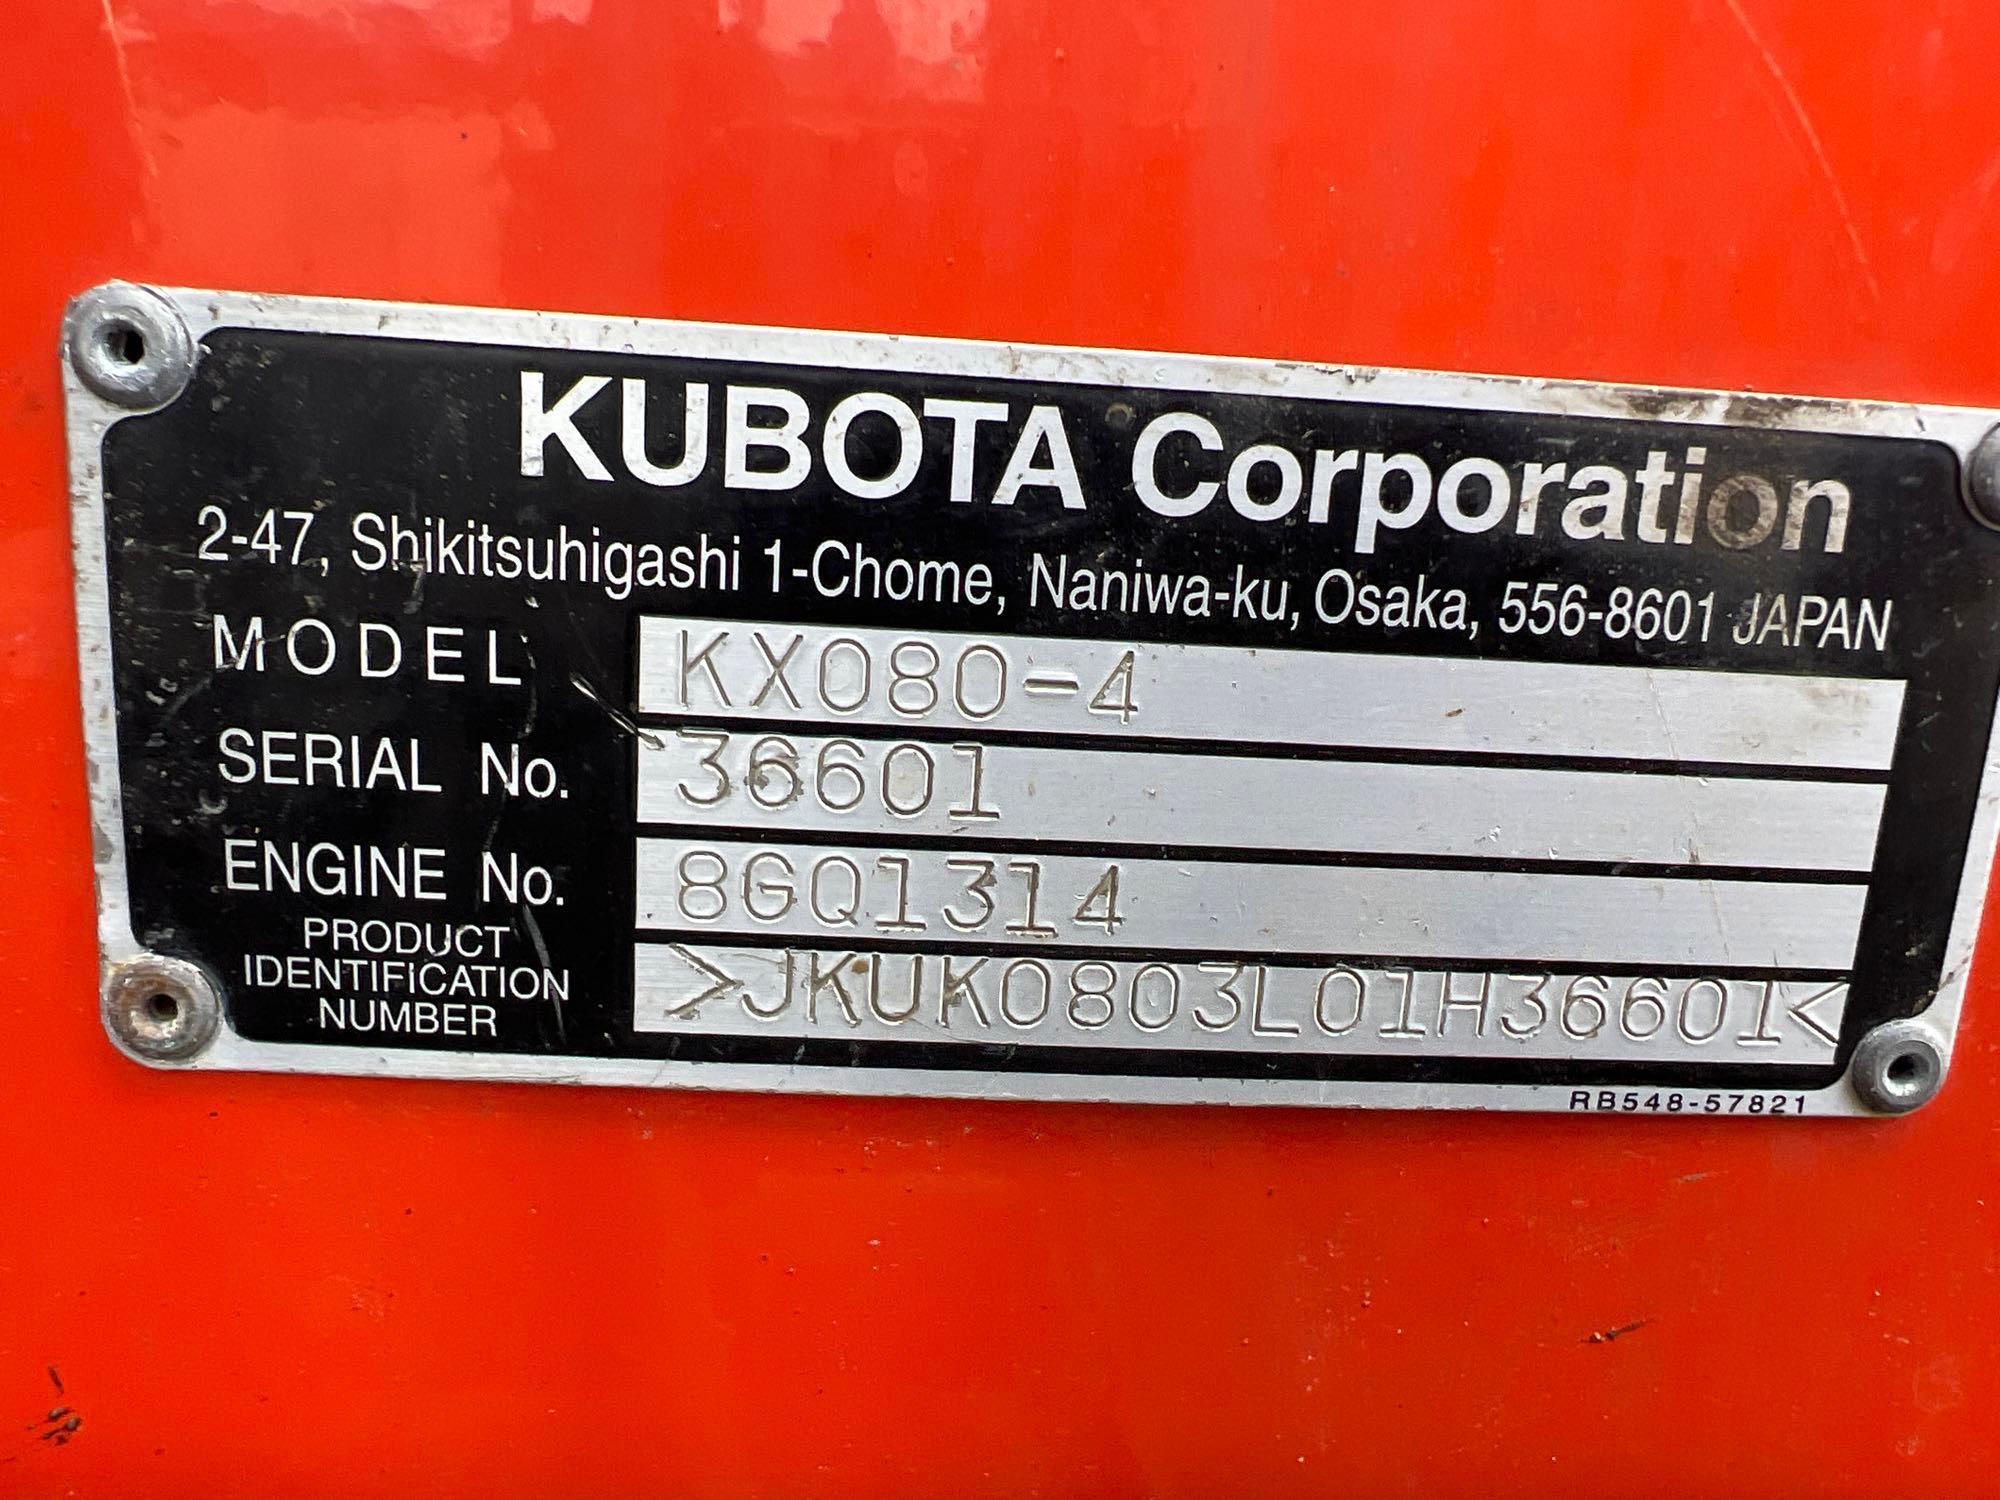 2016 KUBOTA KX080-4R3A HYDRAULIC EXCAVATOR SN:36601 powered by Kubota diesel engine, equipped with